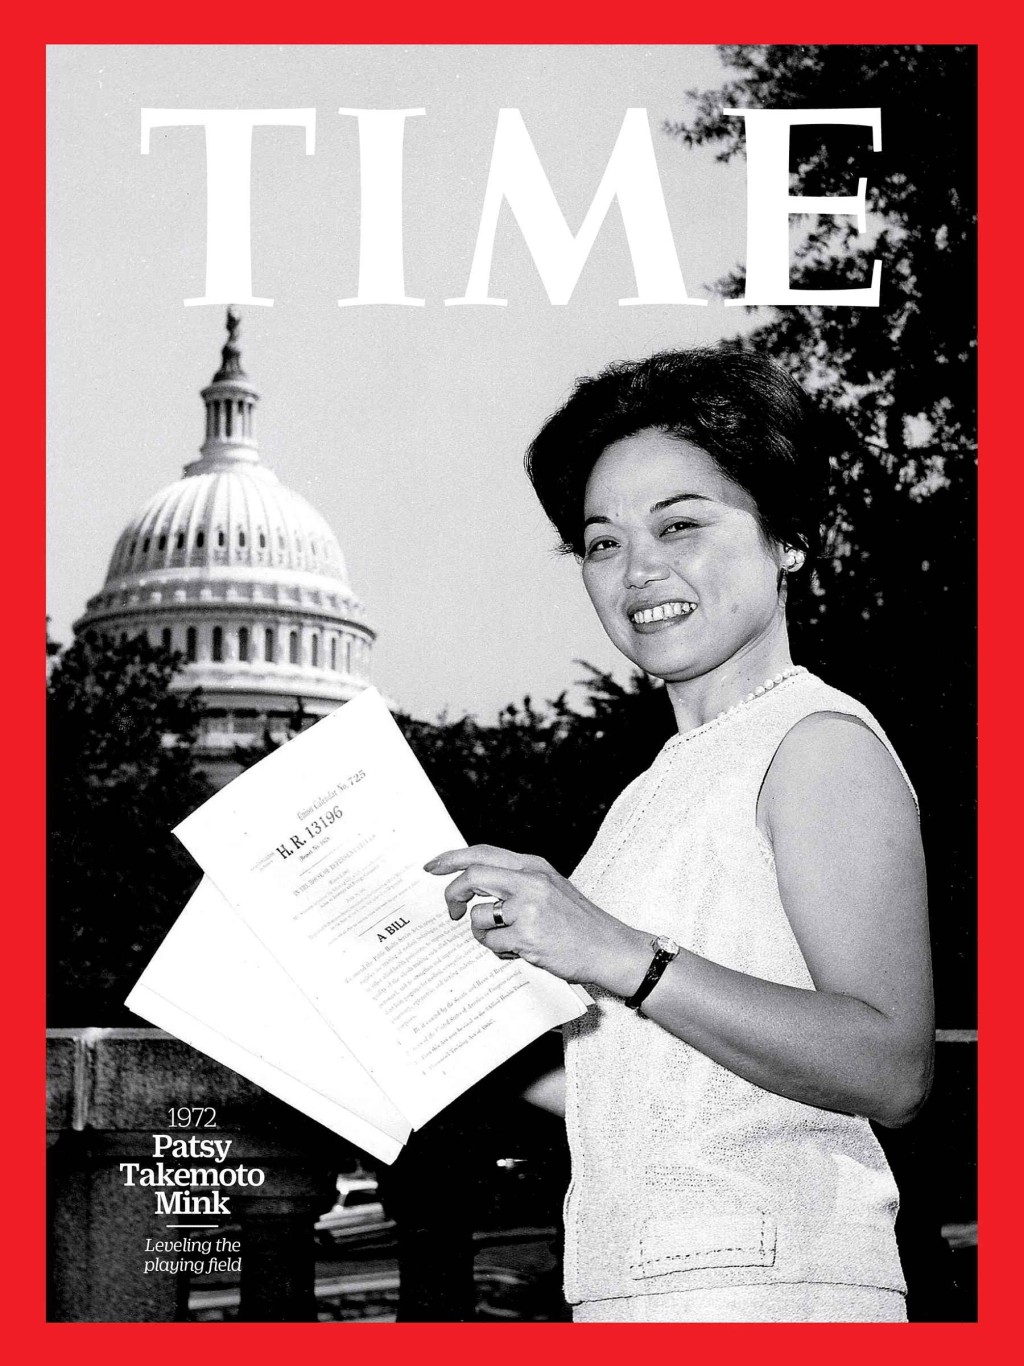 Hana Kuma頭炮是關於已故的日裔第三代美國人竹本松的紀錄片，她是第一位當選美國國會議員的有色人種女性，而Hana Kuma在片中將突出「賦權」和「特定文化」的故事。 網上圖片